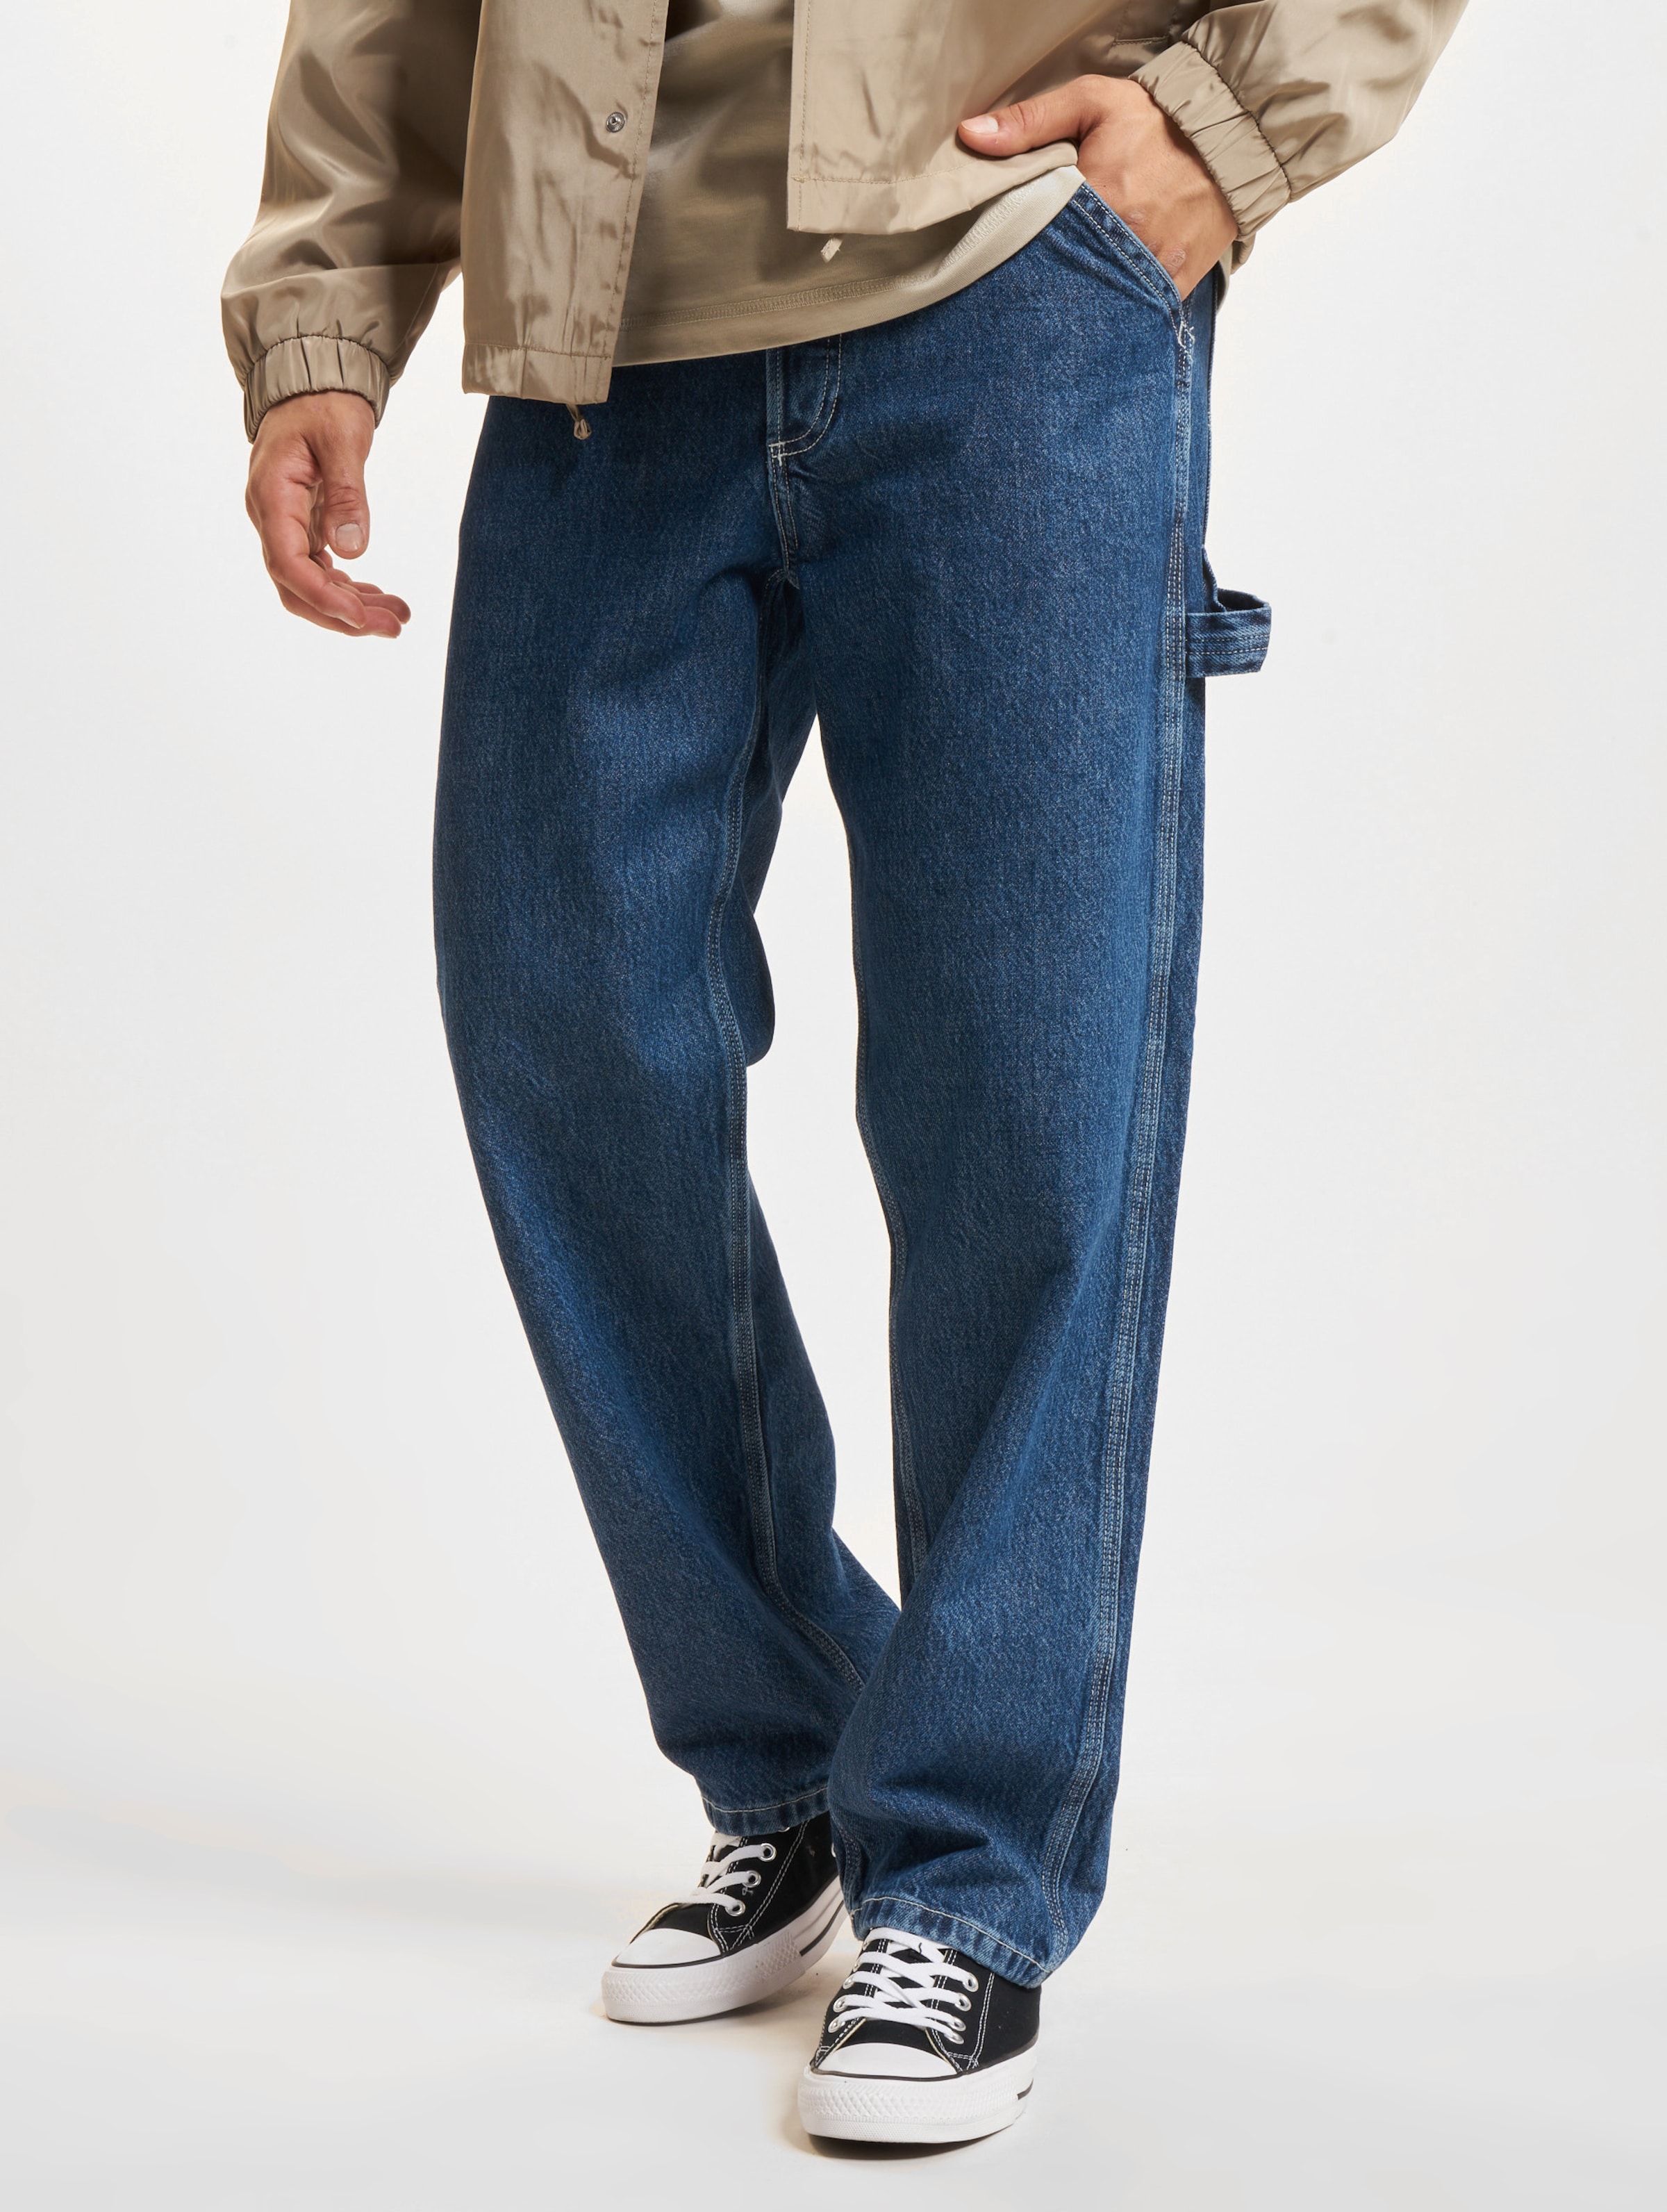 Jack & Jones Eddie Carpenter SBD 316 Loose Fit Jeans Mannen op kleur blauw, Maat 3132